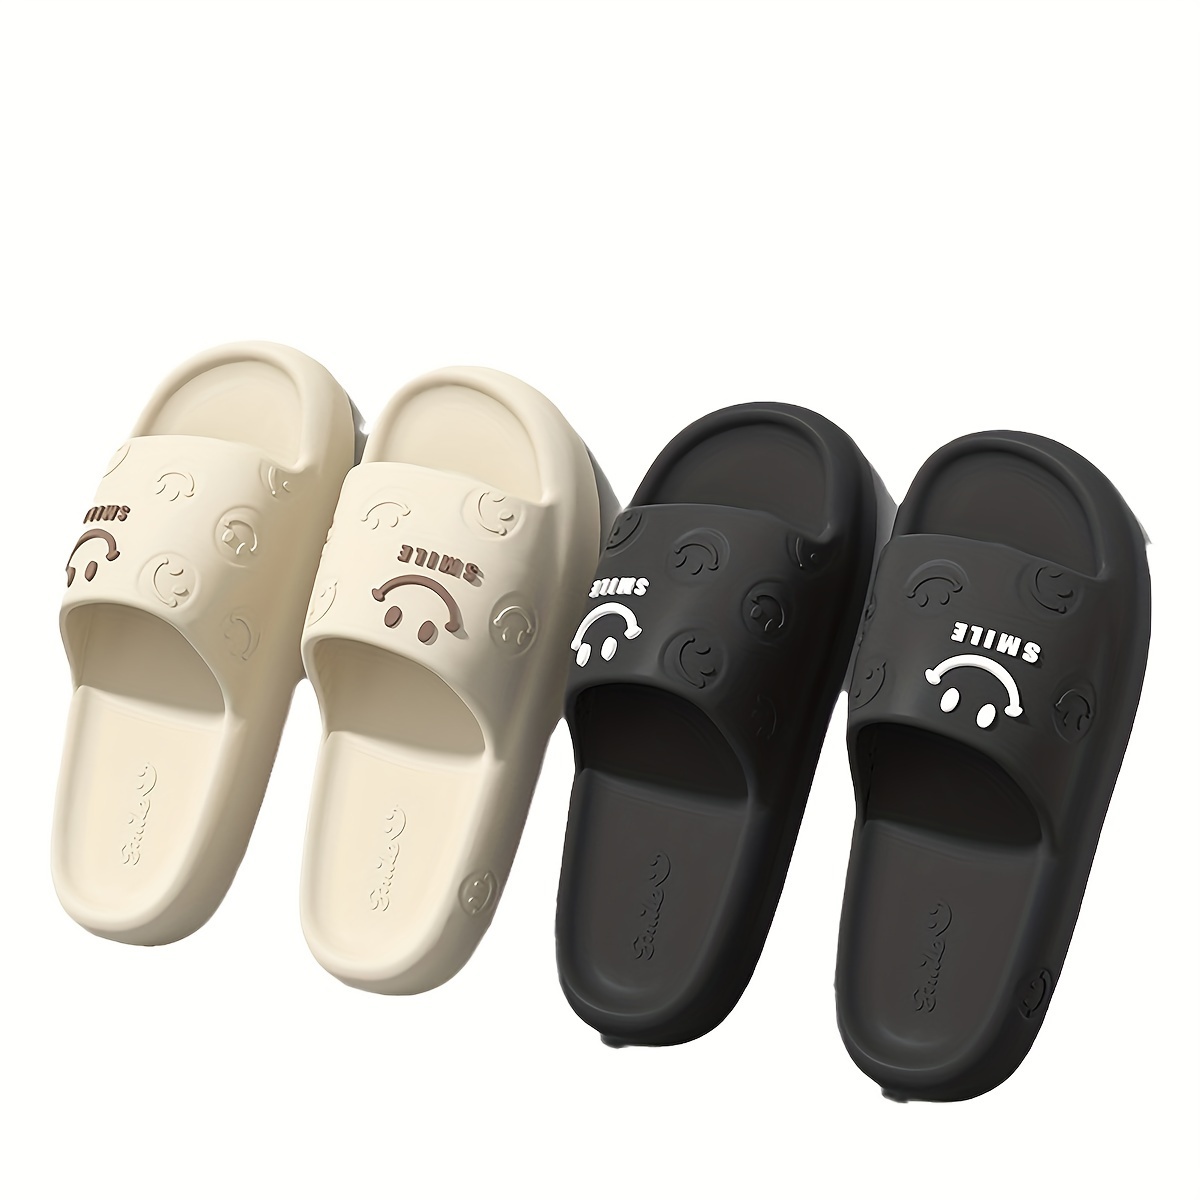 

Cute Smile Design Slides, Casual Open Toe Soft Sole Shoes, Comfortable Indoor Home Slides